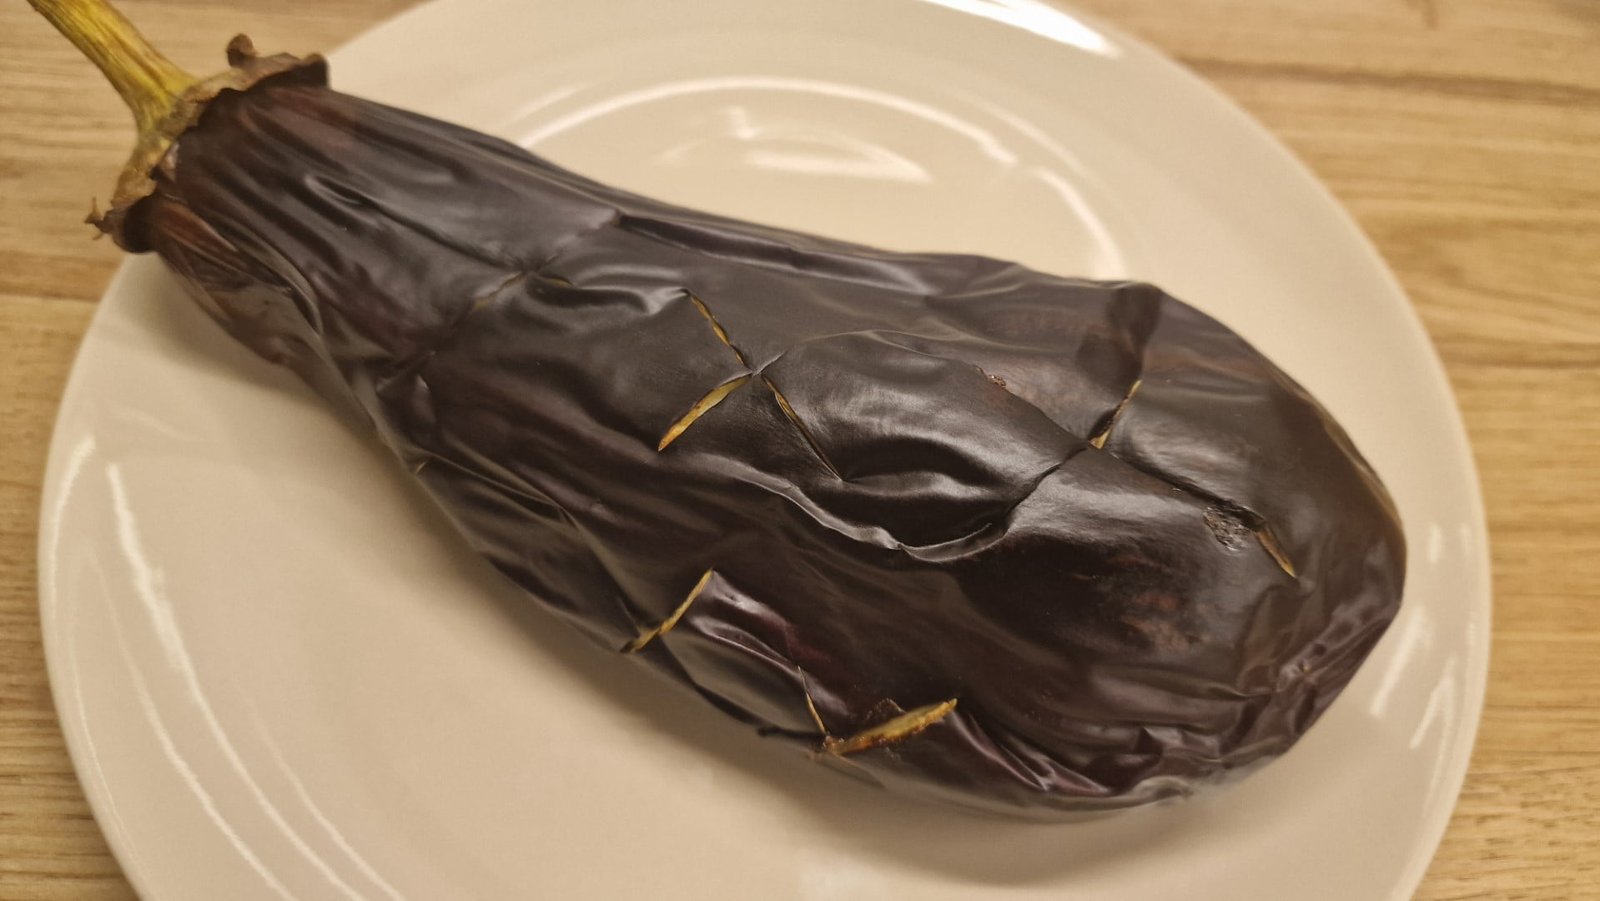 Roasted eggplant in air fryer